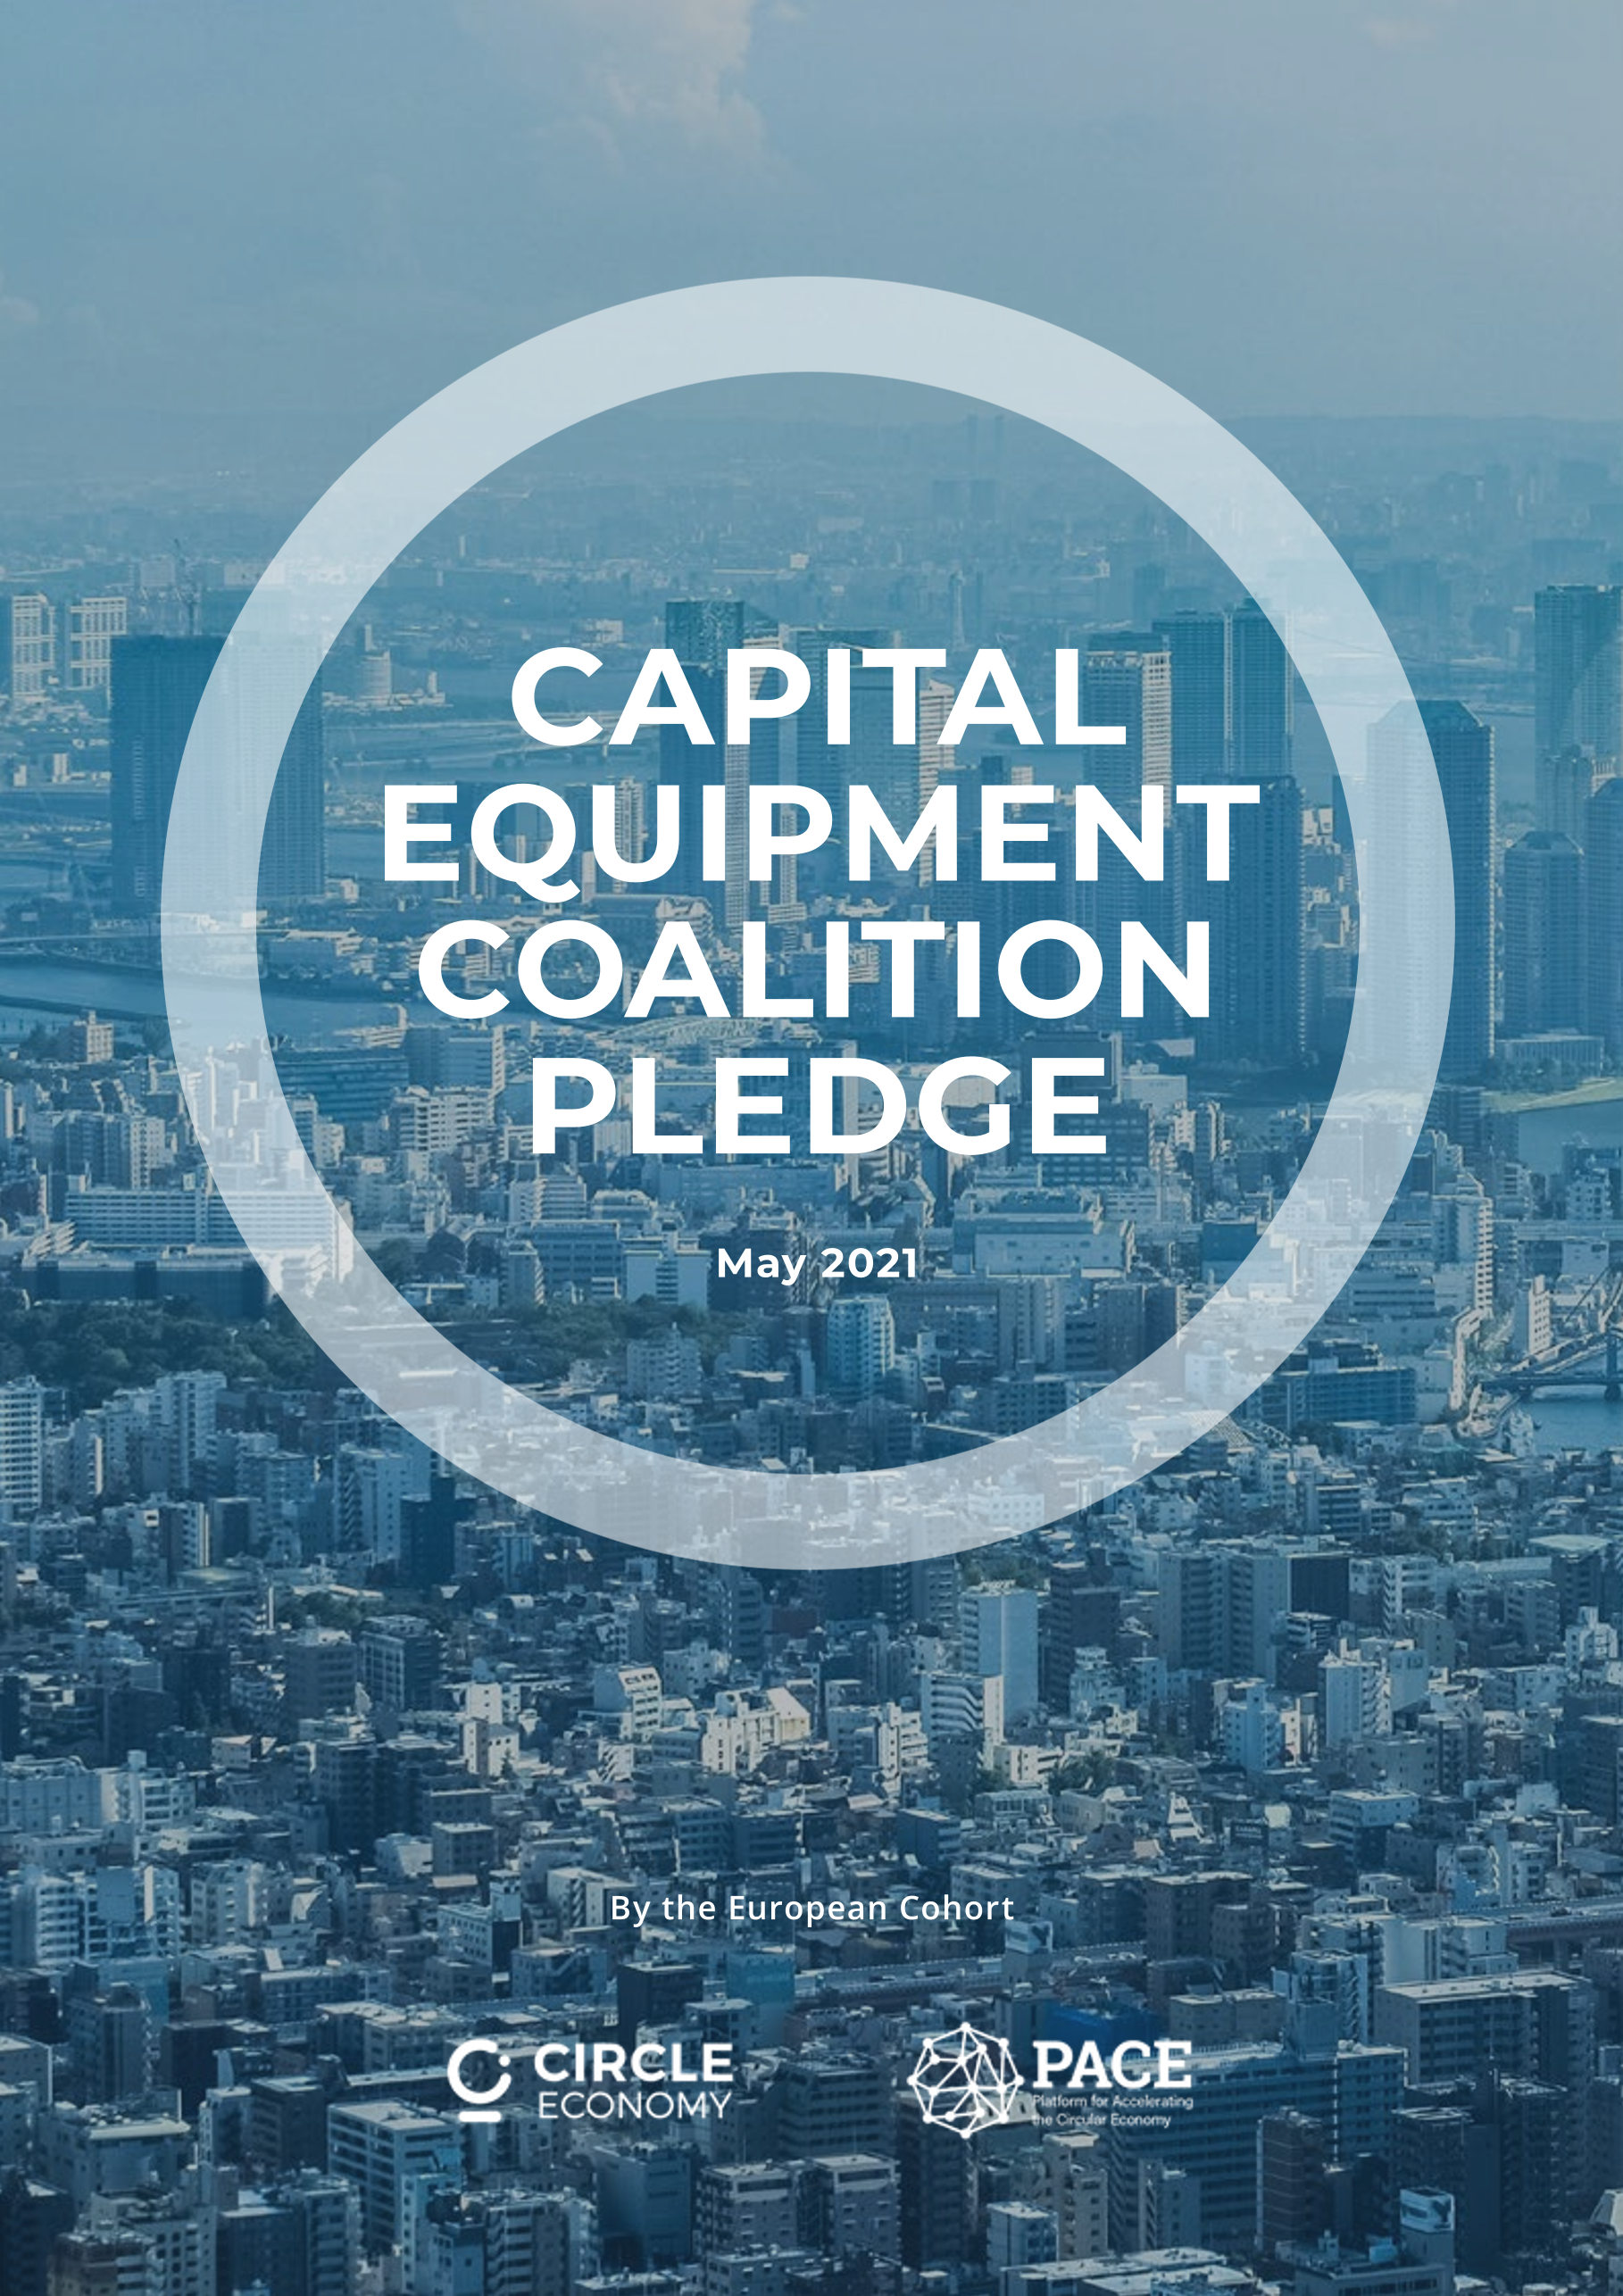  Capital Equipment Coalition Pledge - May 2021